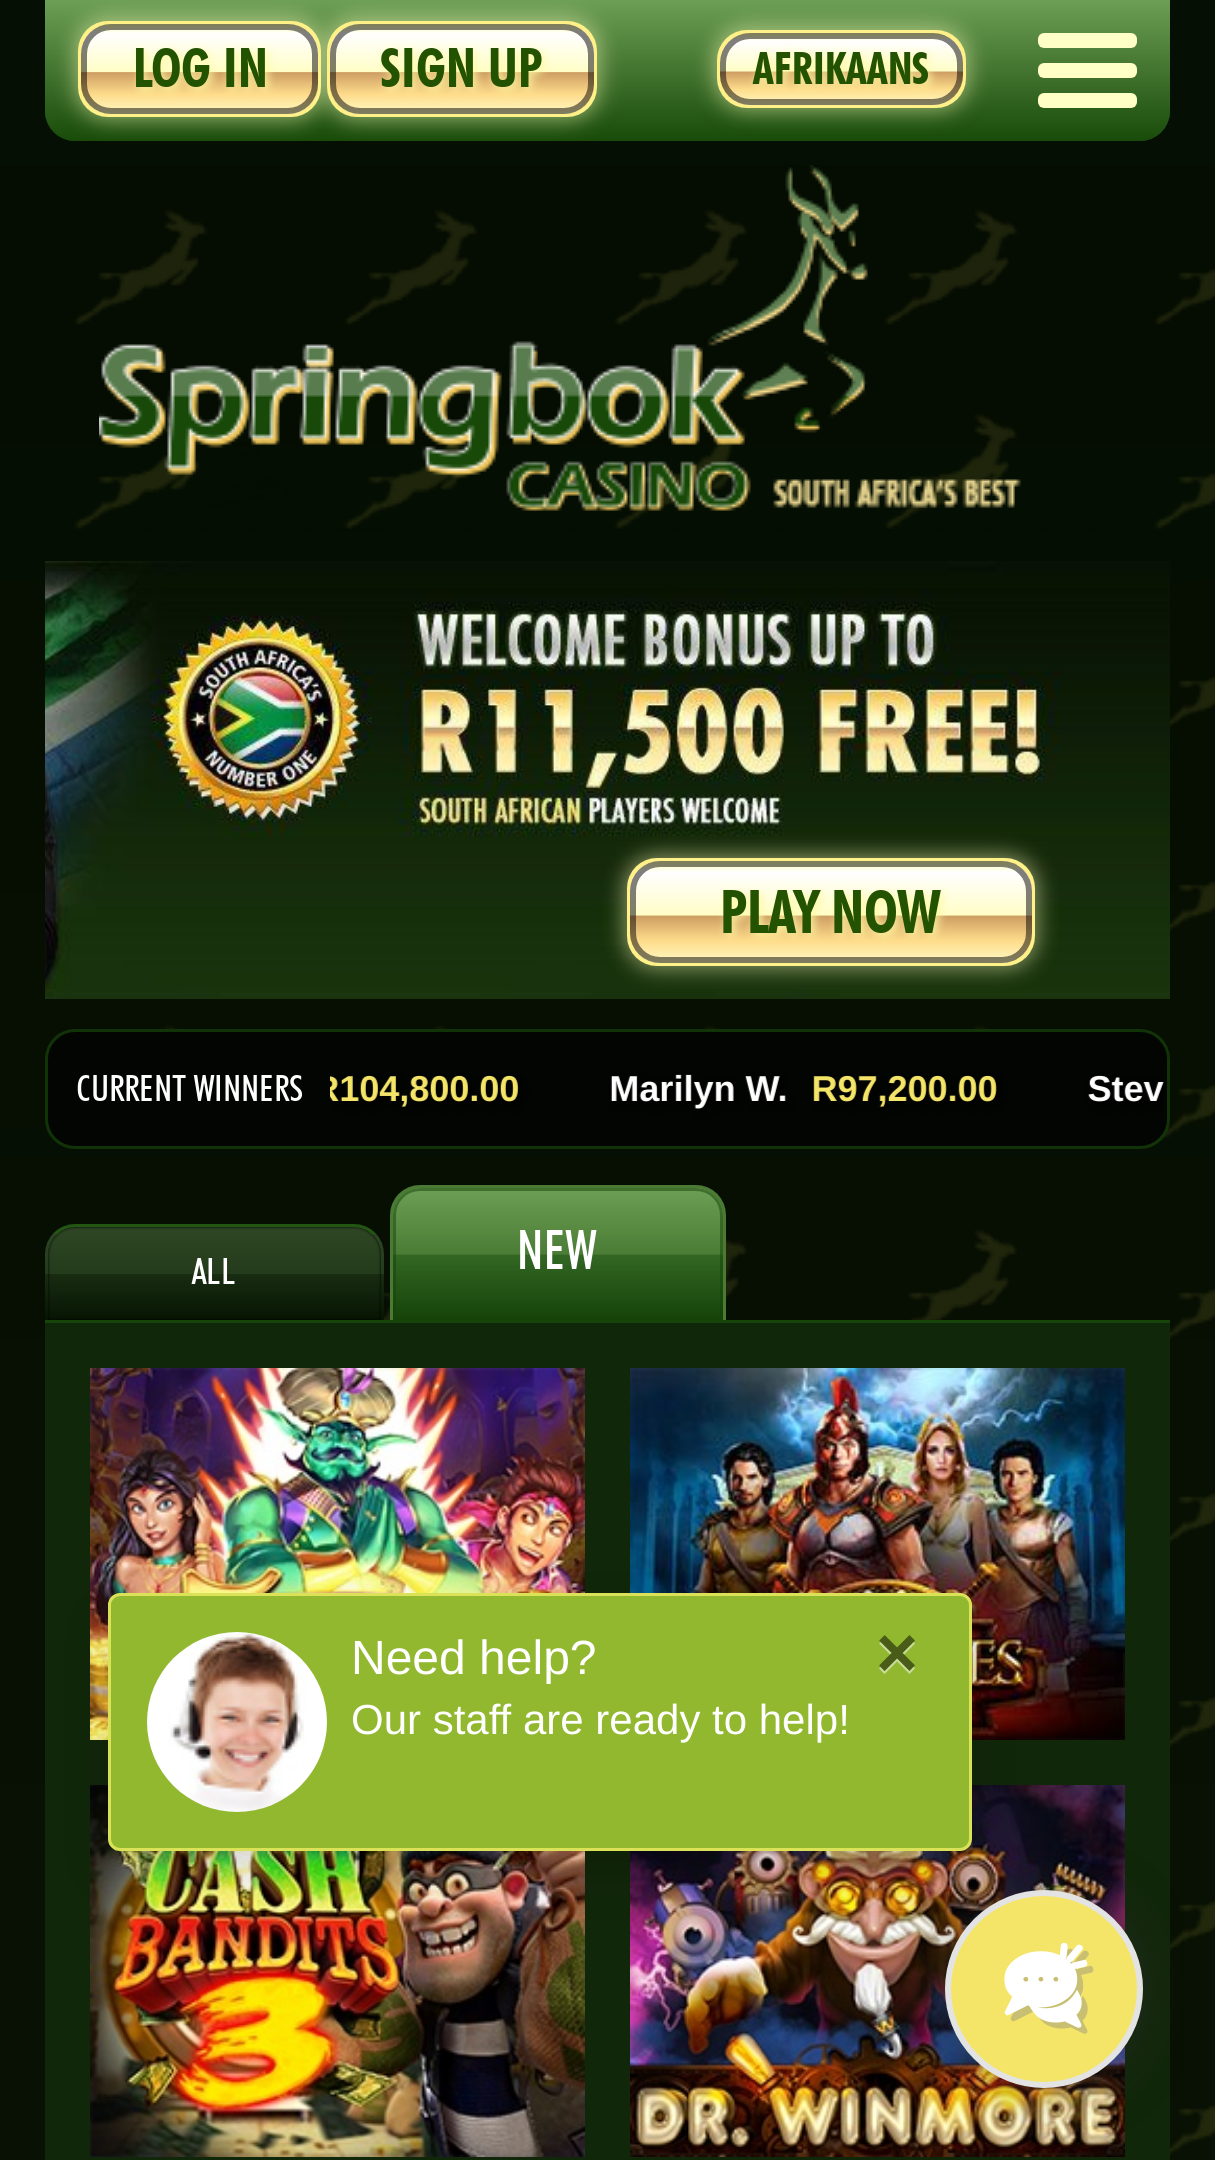 Springbok casino mobile app downloads